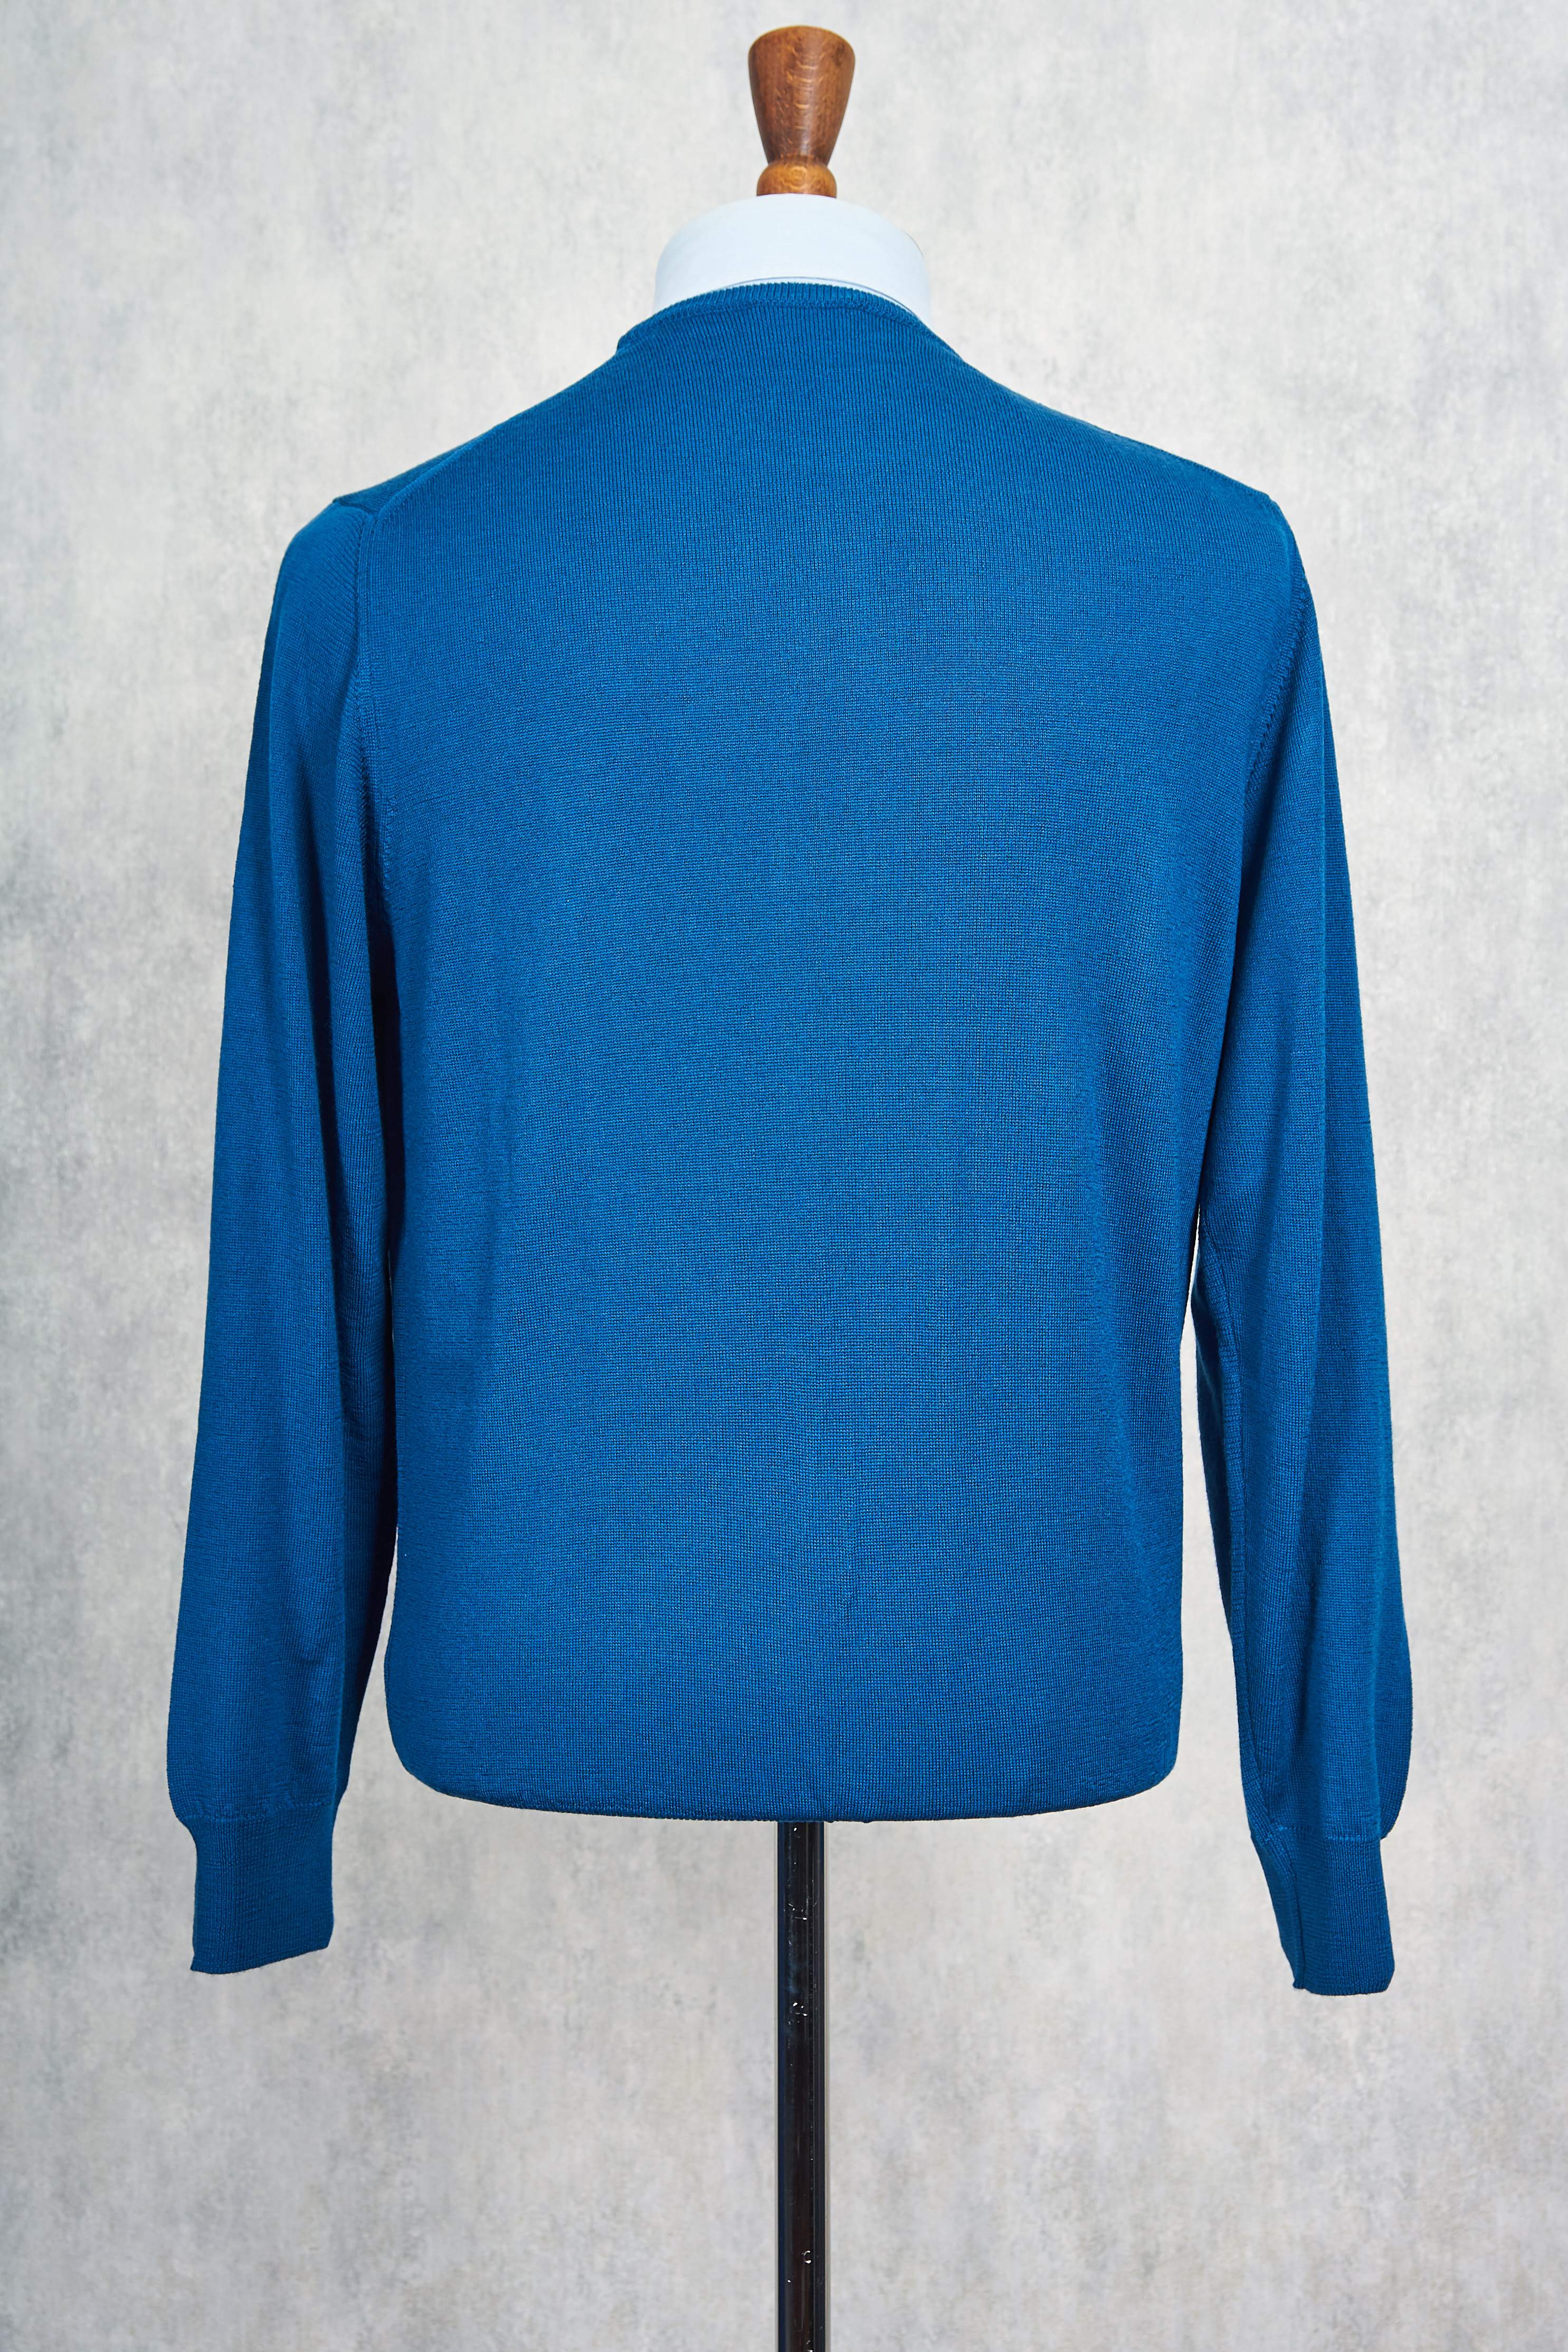 Ascot Chang Blue Extra-Fine Merino Wool Round Neck Sweater